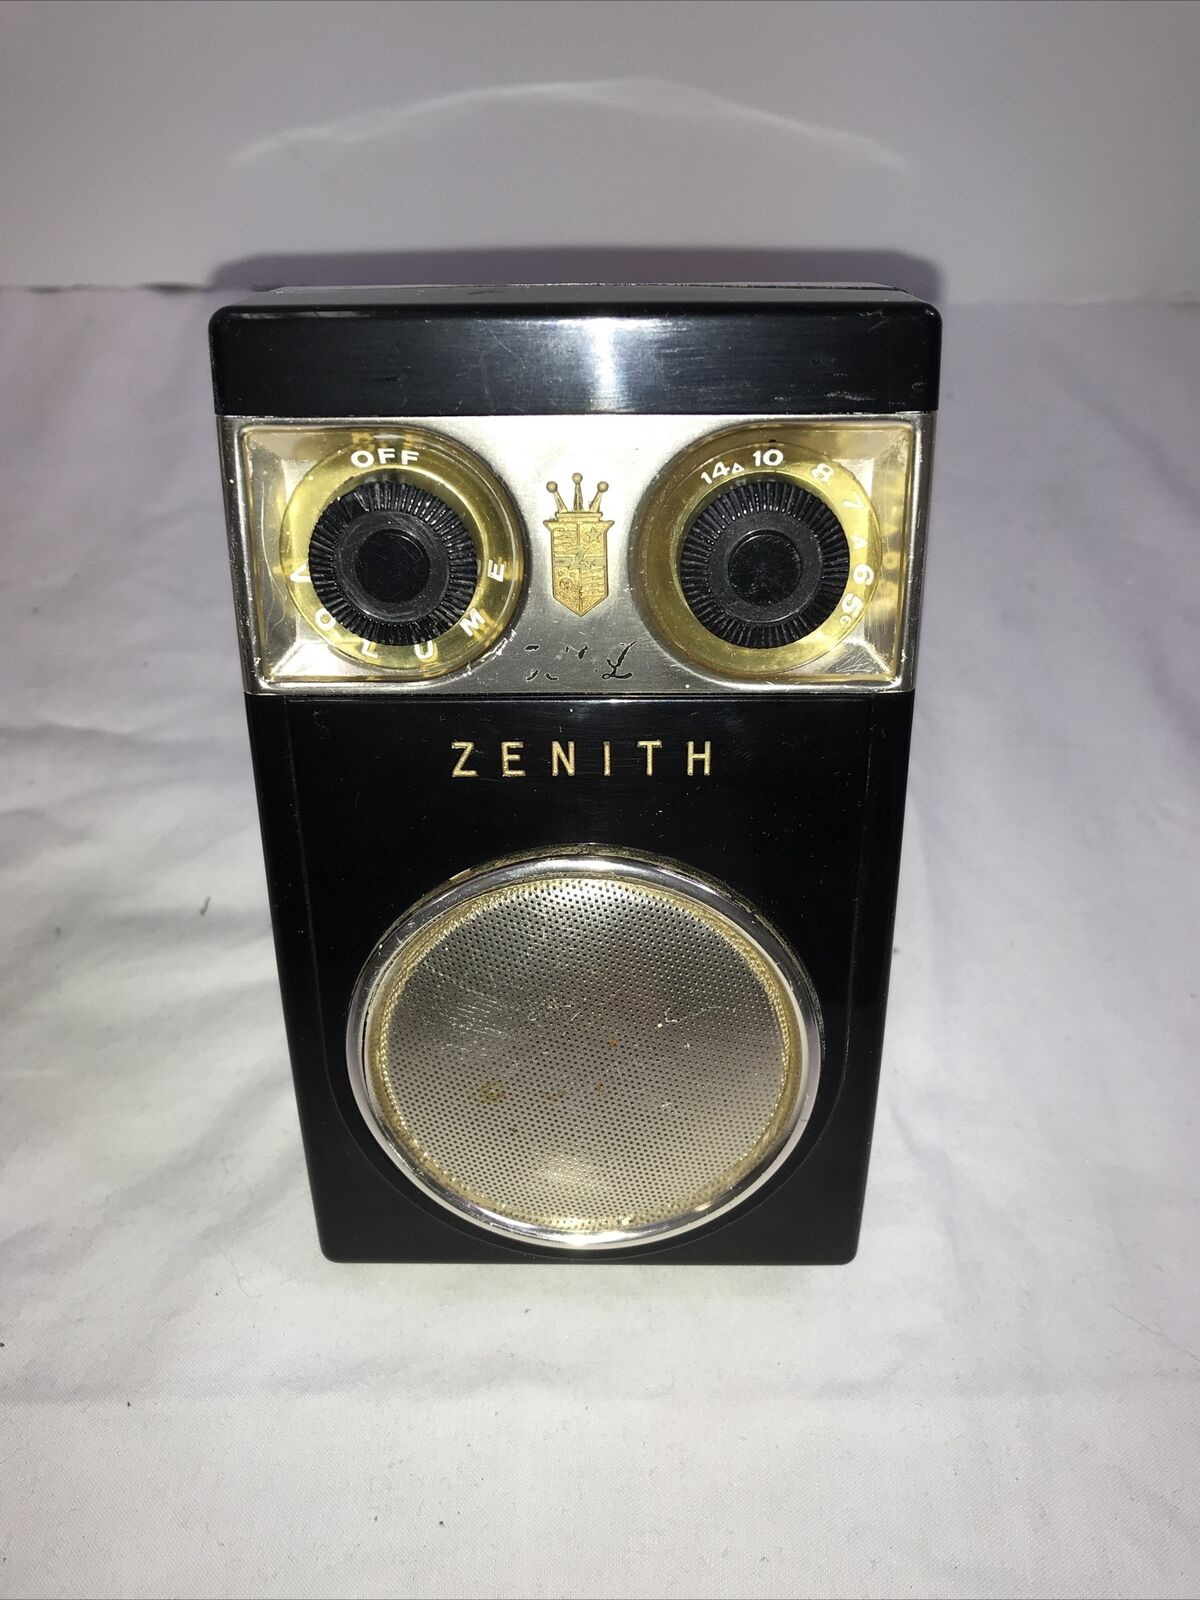 Zenith Radio Royal 500 - 1955 Built (Tested)